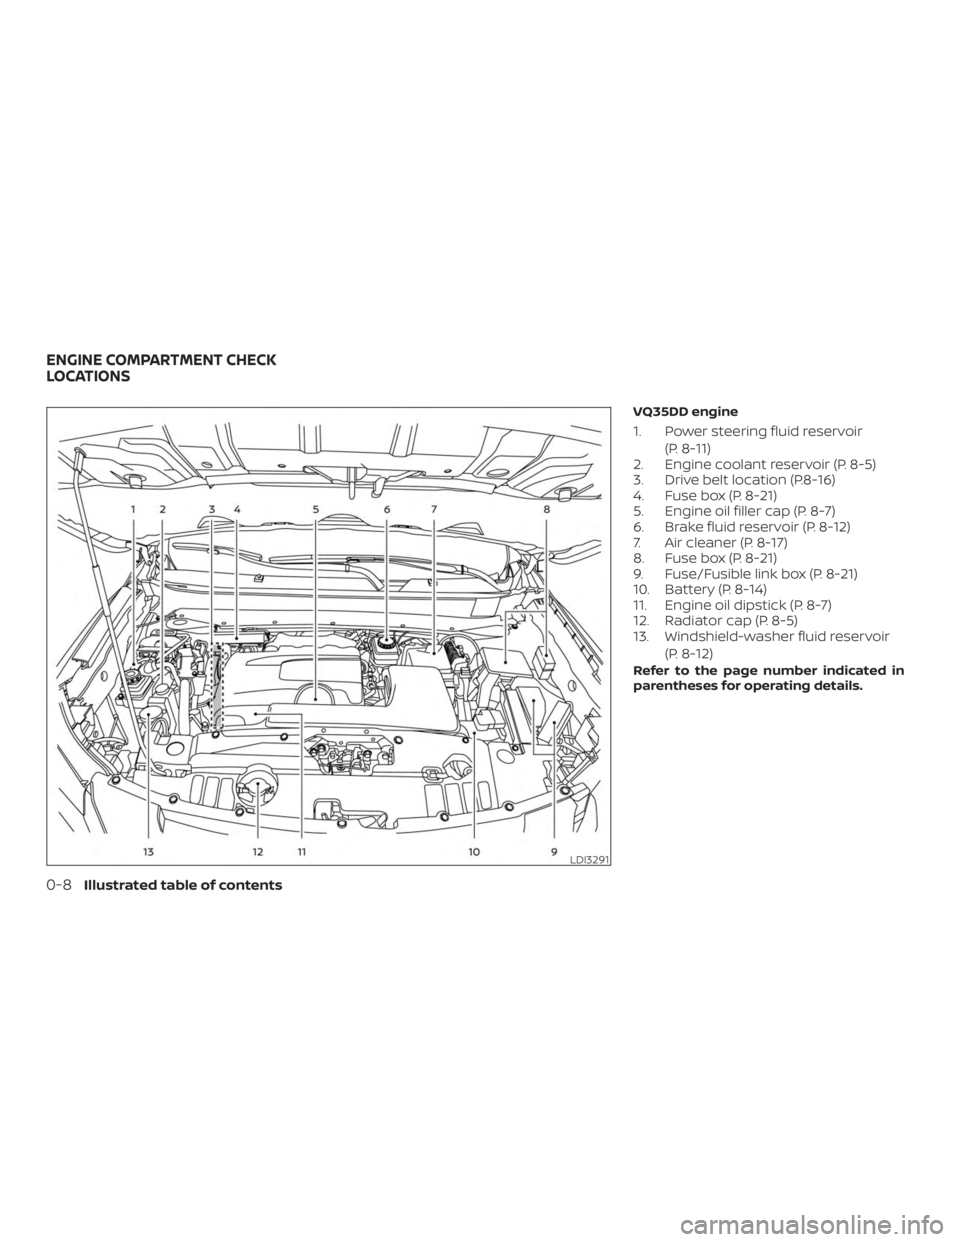 NISSAN PATHFINDER 2020  Owner´s Manual VQ35DD engine
1. Power steering fluid reservoir(P. 8-11)
2. Engine coolant reservoir (P. 8-5)
3. Drive belt location (P.8-16)
4. Fuse box (P. 8-21)
5. Engine oil filler cap (P. 8-7)
6. Brake fluid res